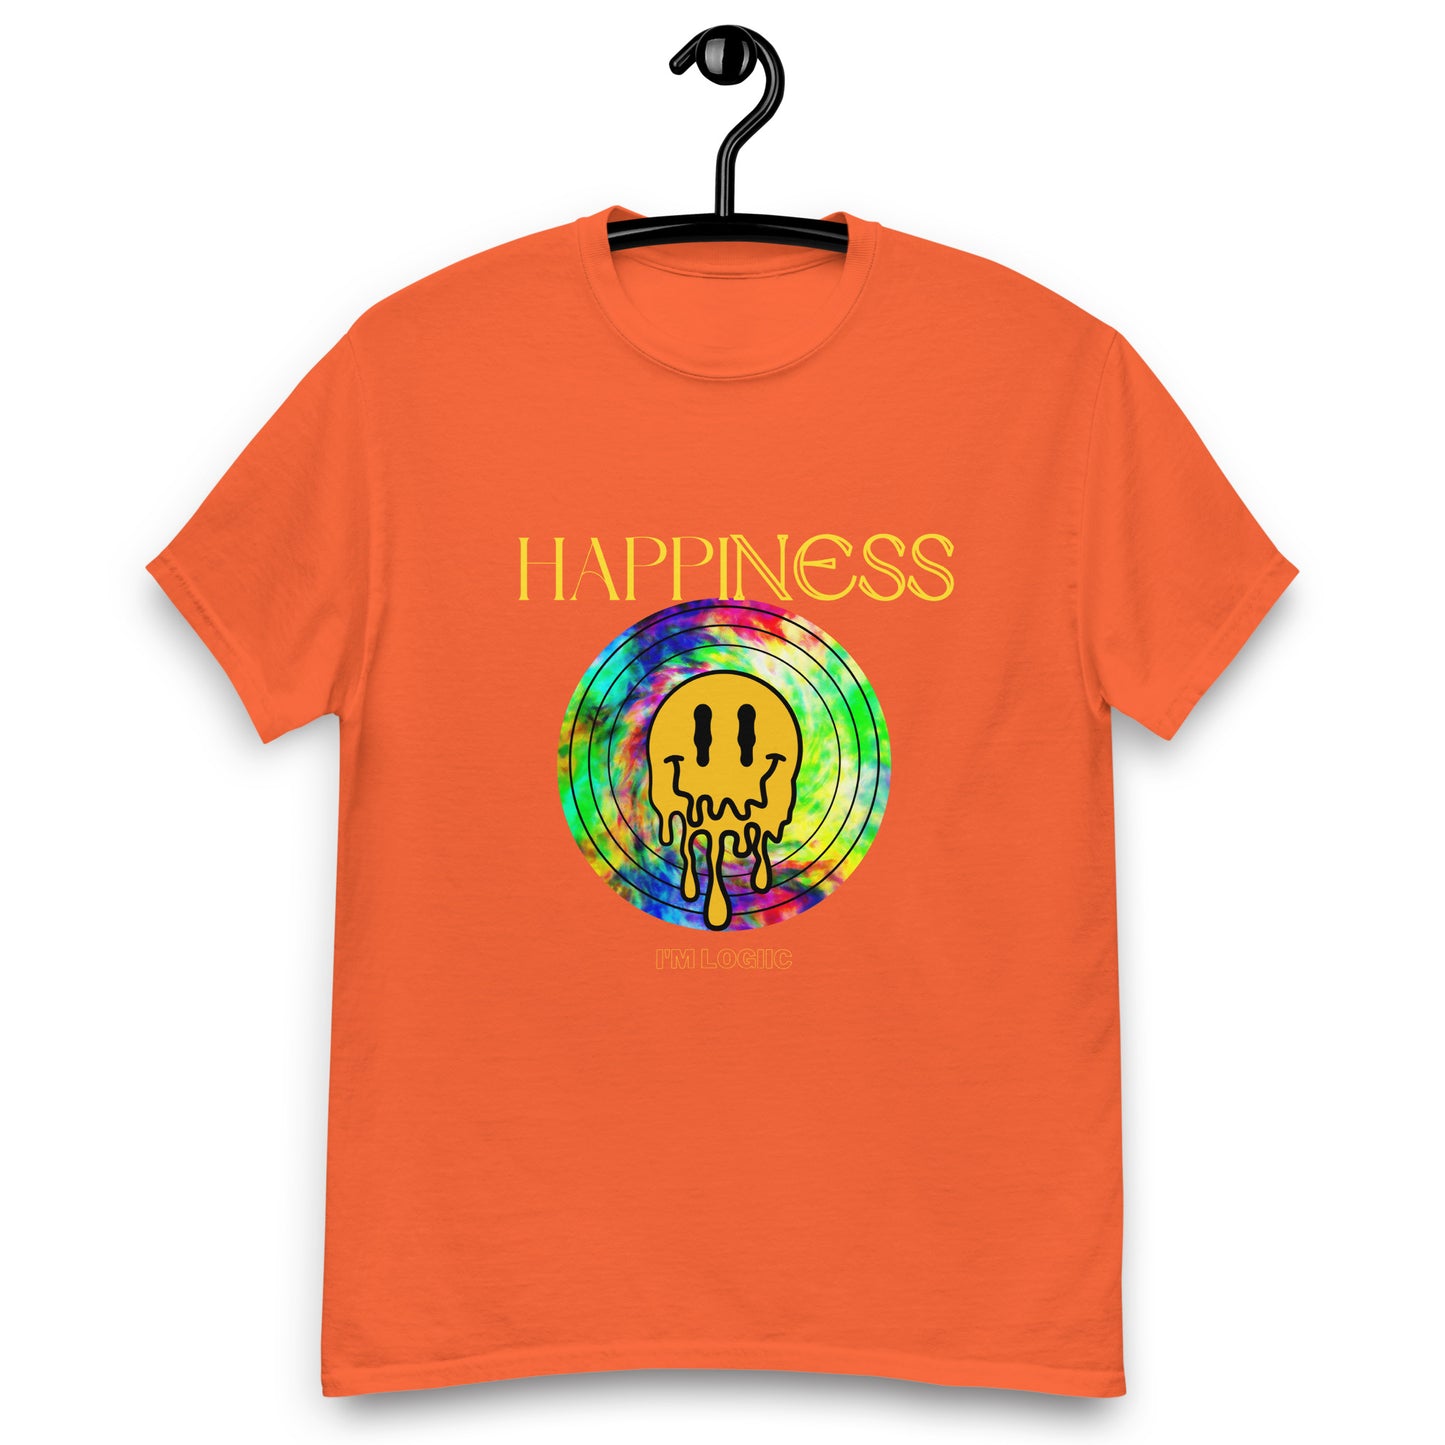 Happiness Christian Tshirt